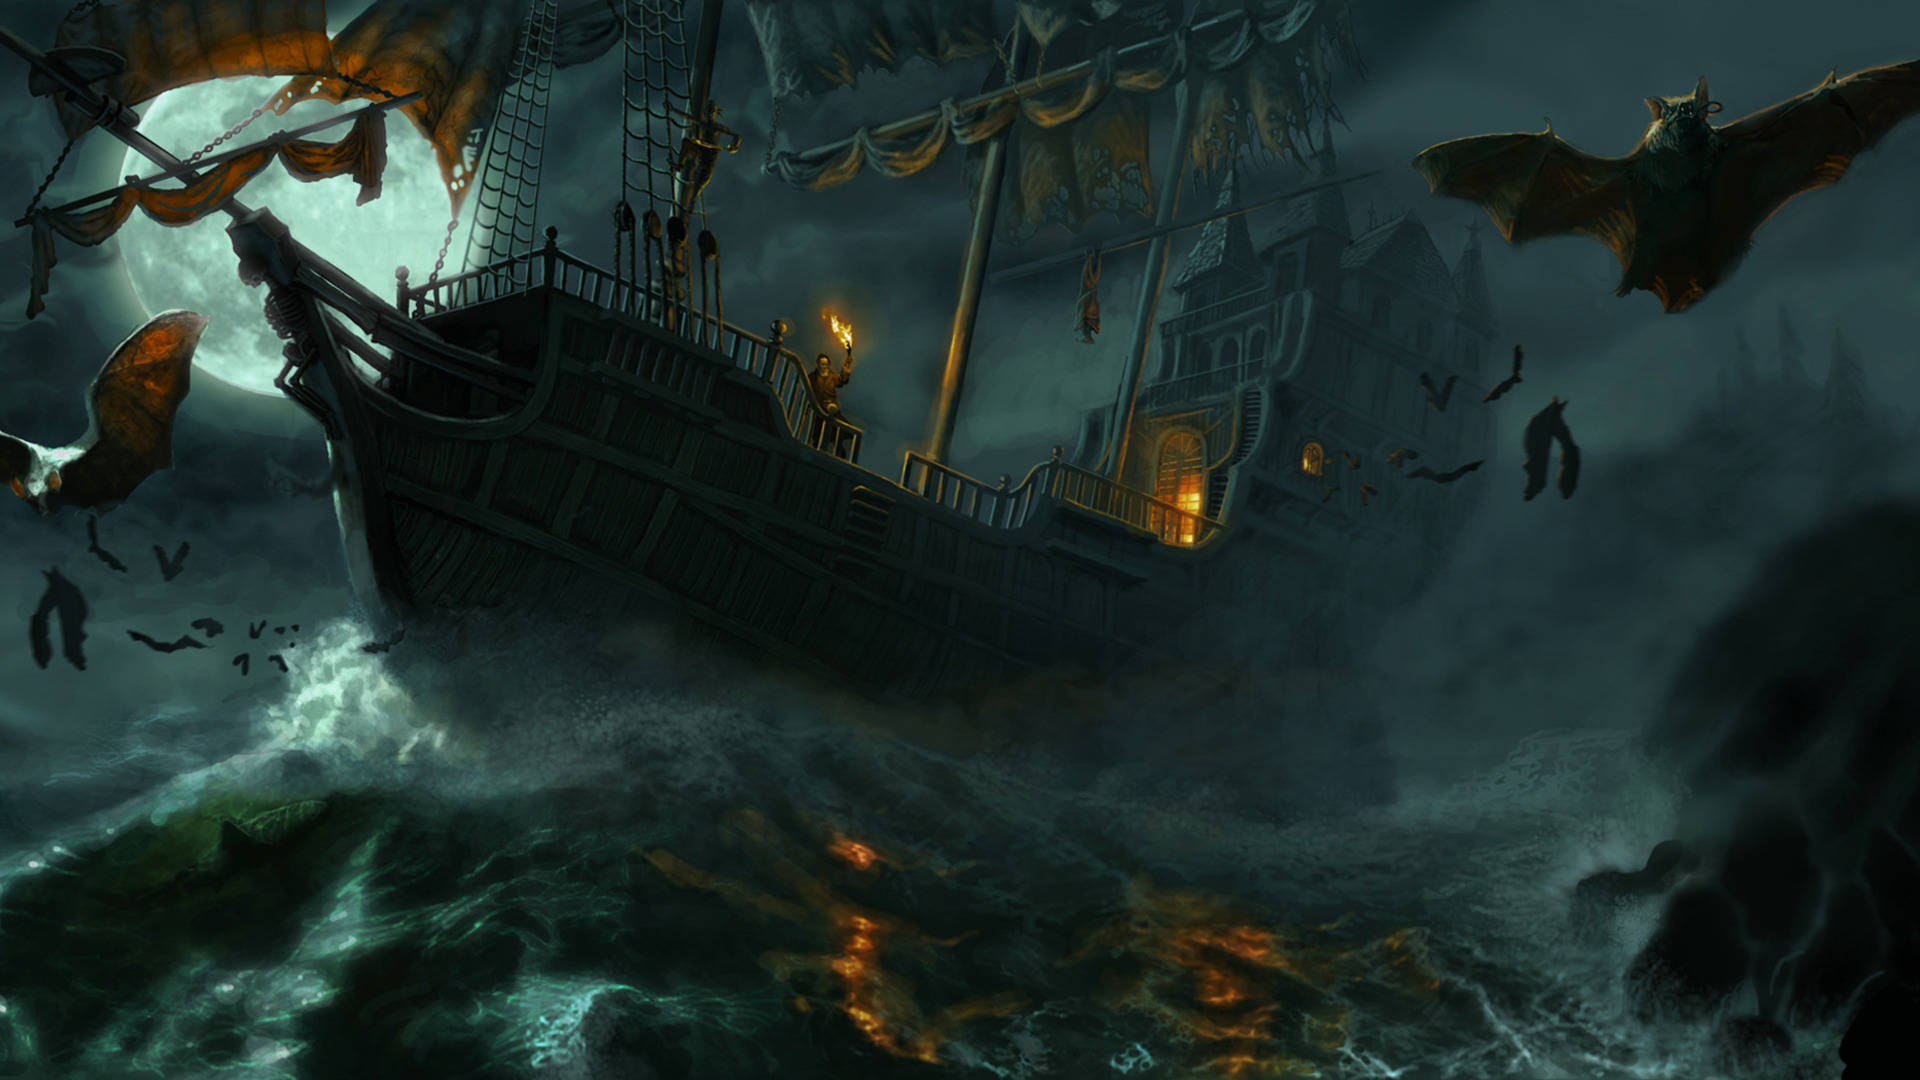 Ghost Ship Digital Artwork Wallpaper